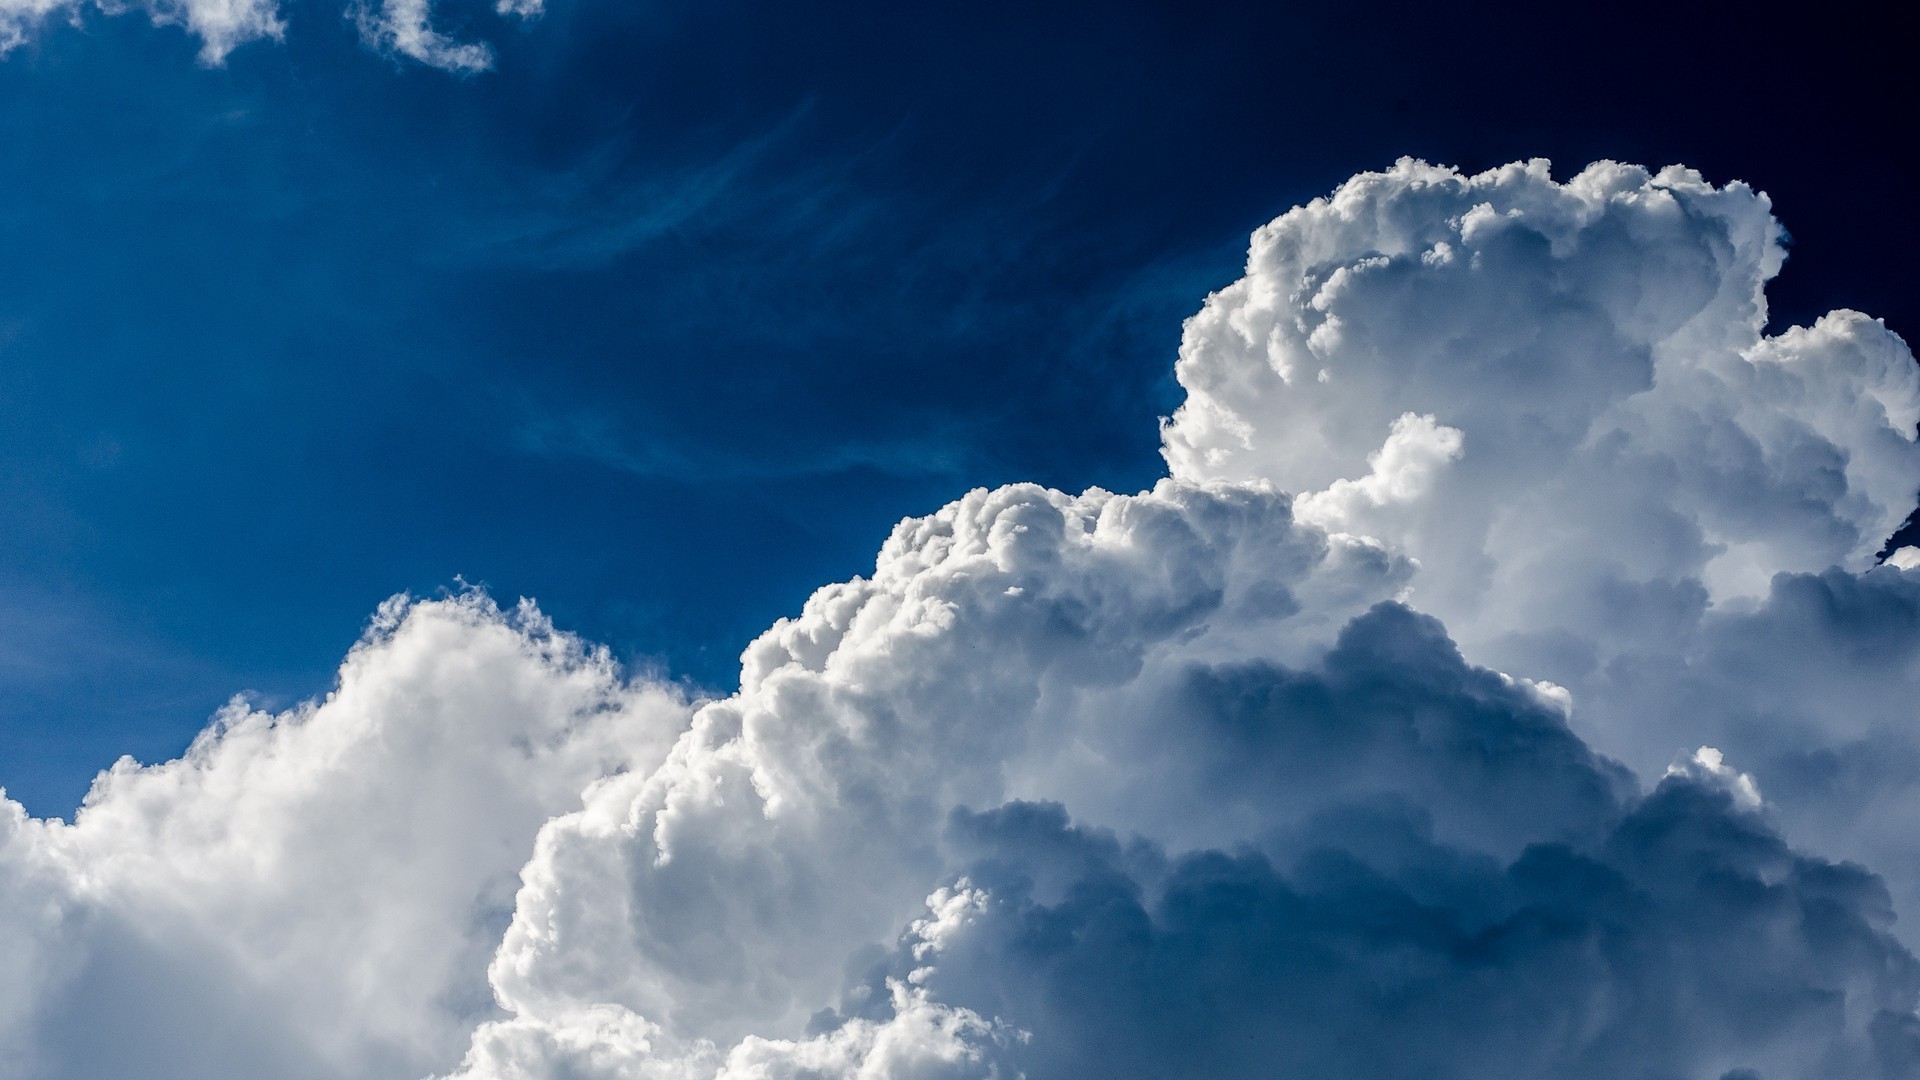 cloud sky wallpaper,sky,cloud,cumulus,daytime,blue